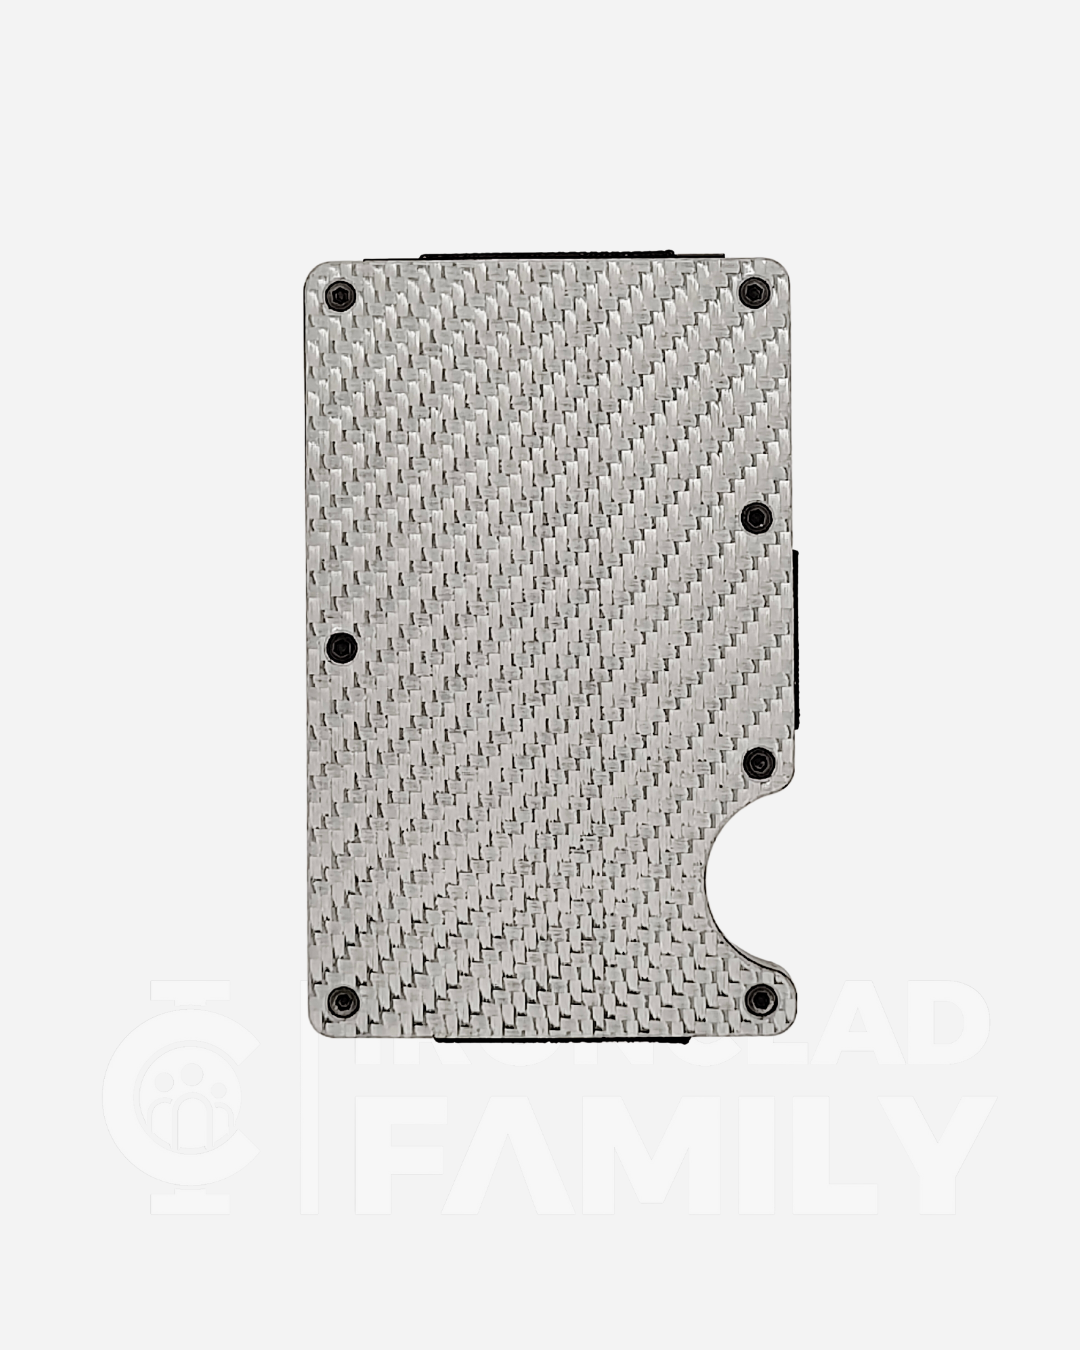 Carbon fiber wallet with a metallic silver case for enhanced protection